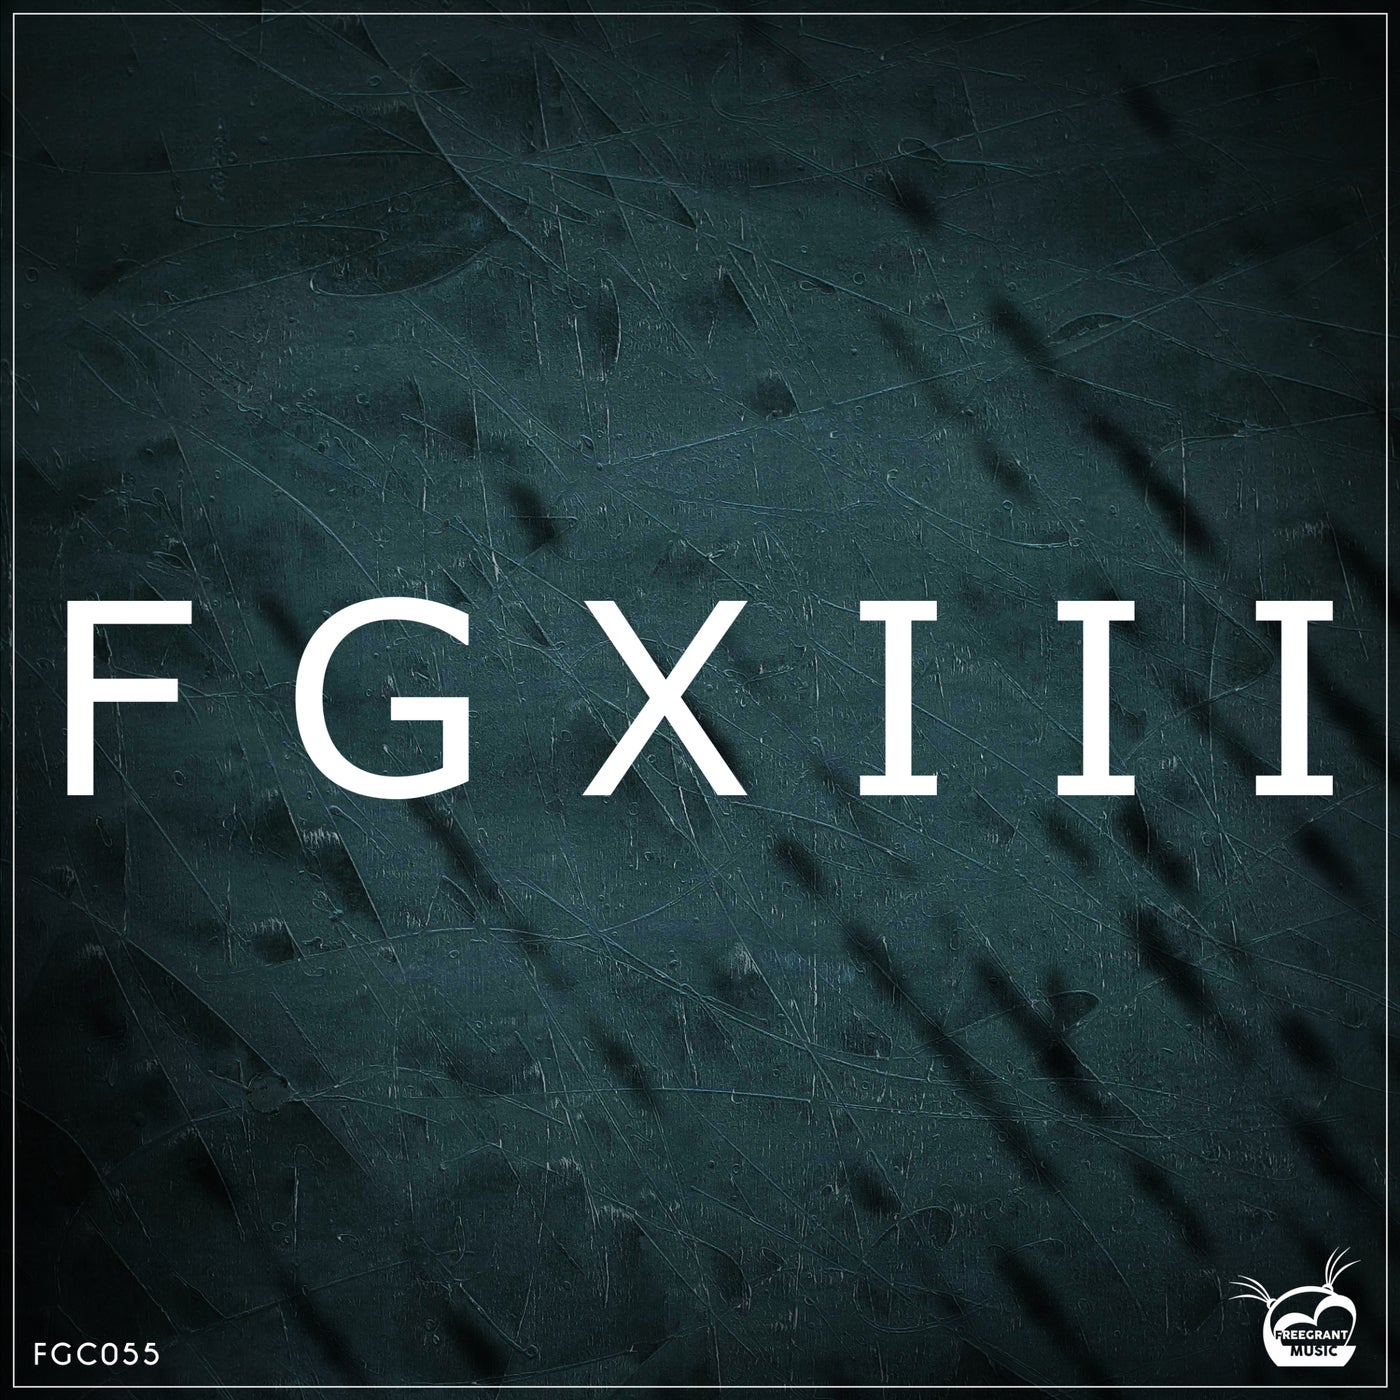 FGXIII (13th Years Anniversary)